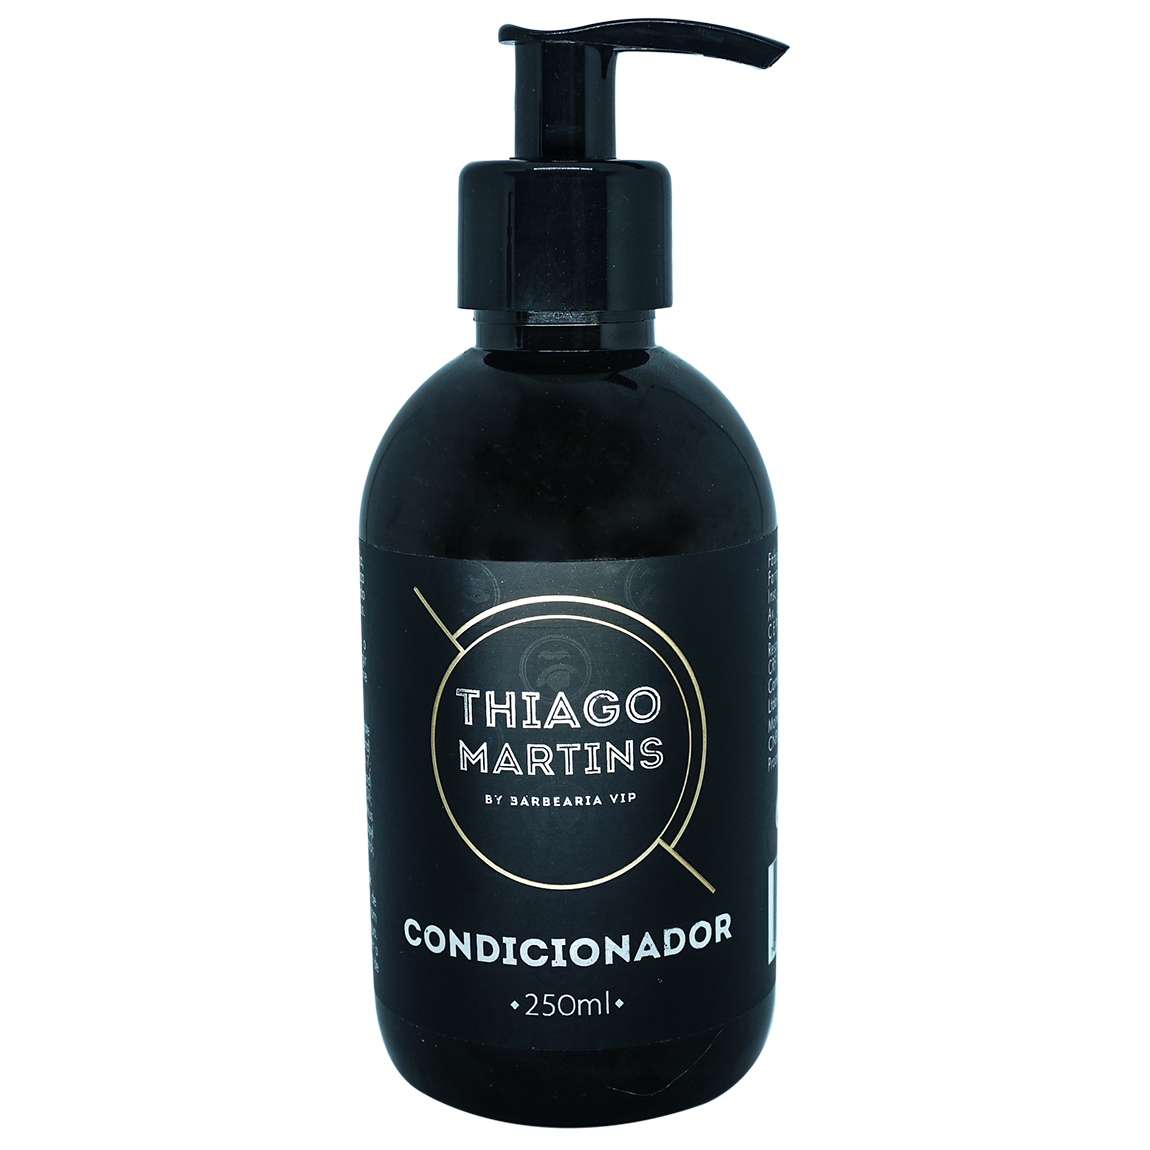 Condicionador Thiago Martins by Barbearia VIP